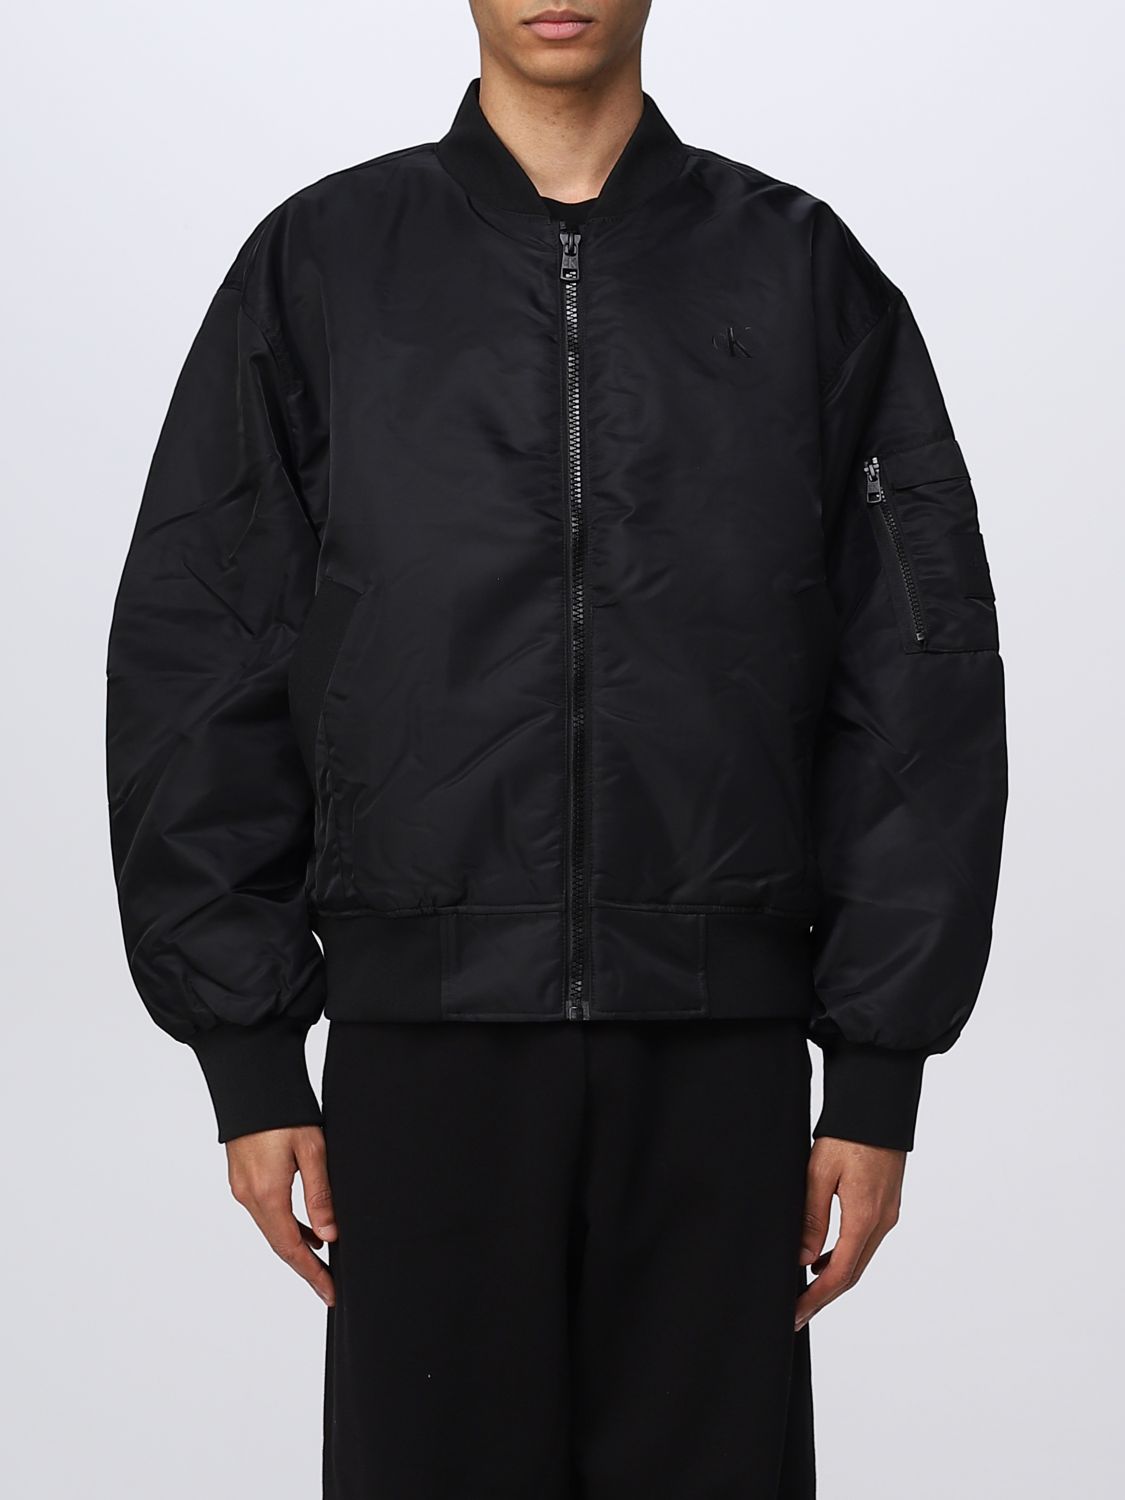 puree verbinding verbroken Doorzichtig CALVIN KLEIN JEANS: jacket for man - Black | Calvin Klein Jeans jacket  J30J322491 online on GIGLIO.COM